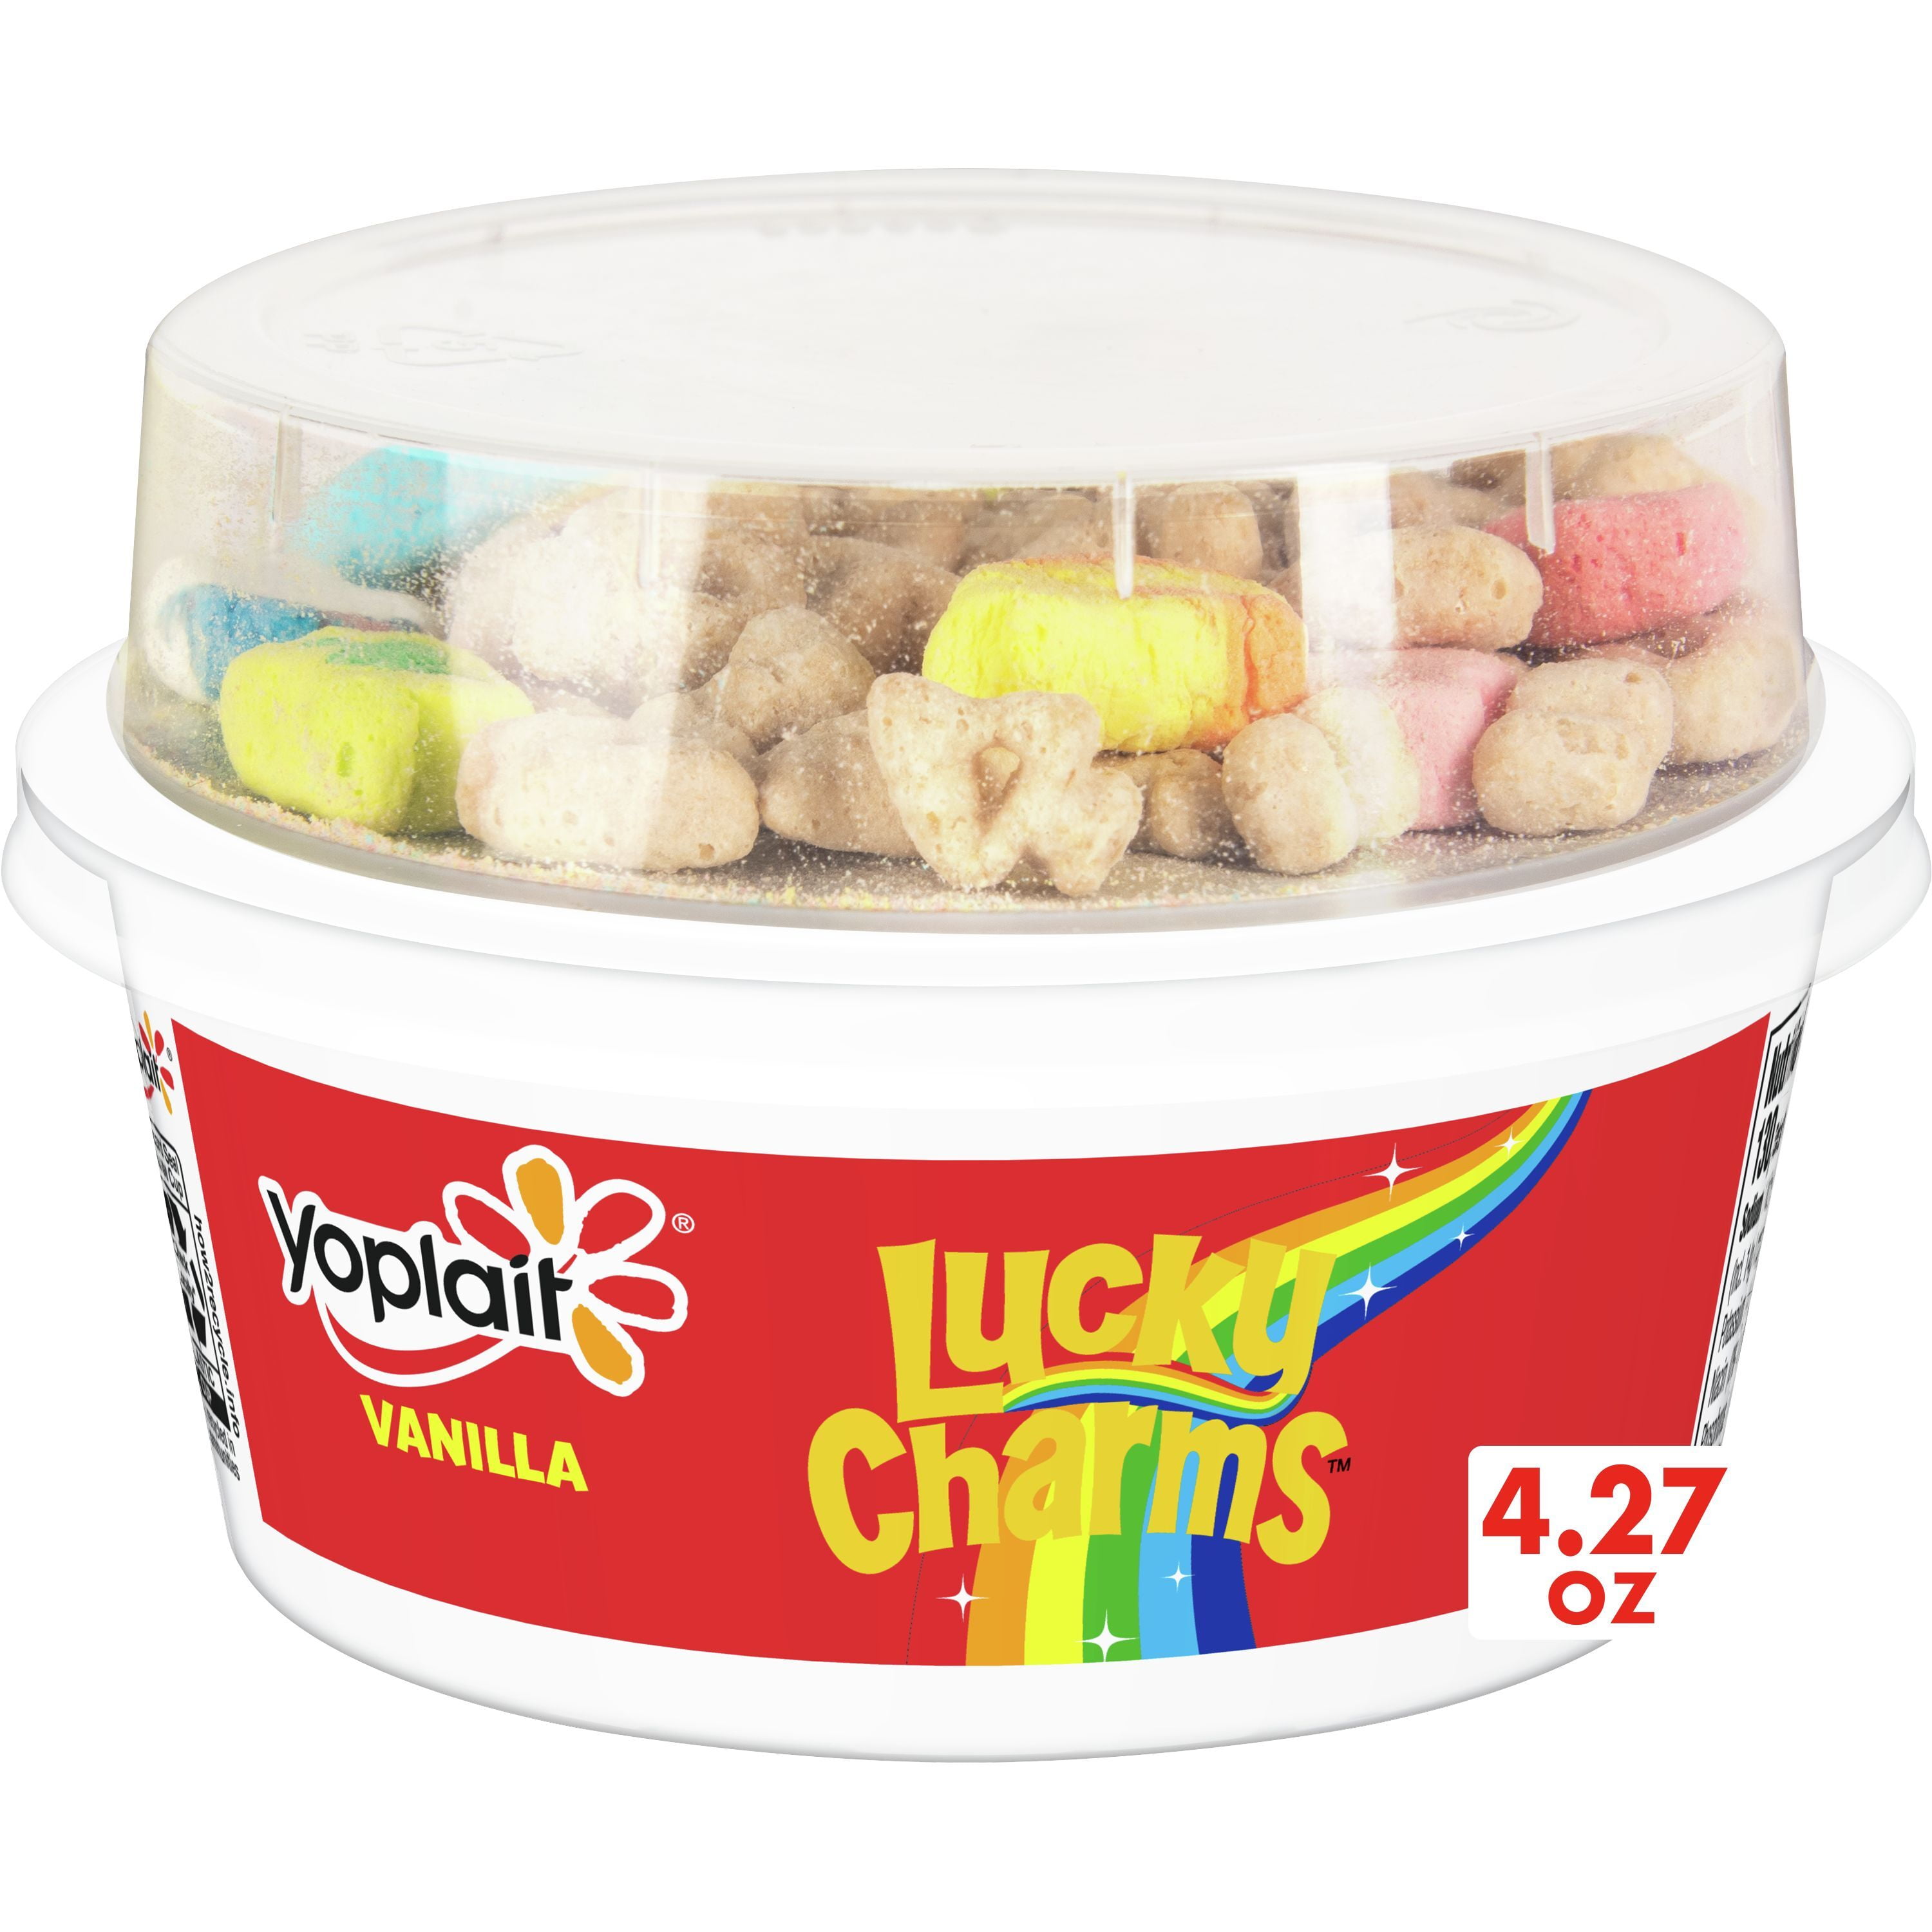 Yoplait Vanilla Low Fat Yogurt & Lucky Charms Cereal Snack, 4.27 OZ